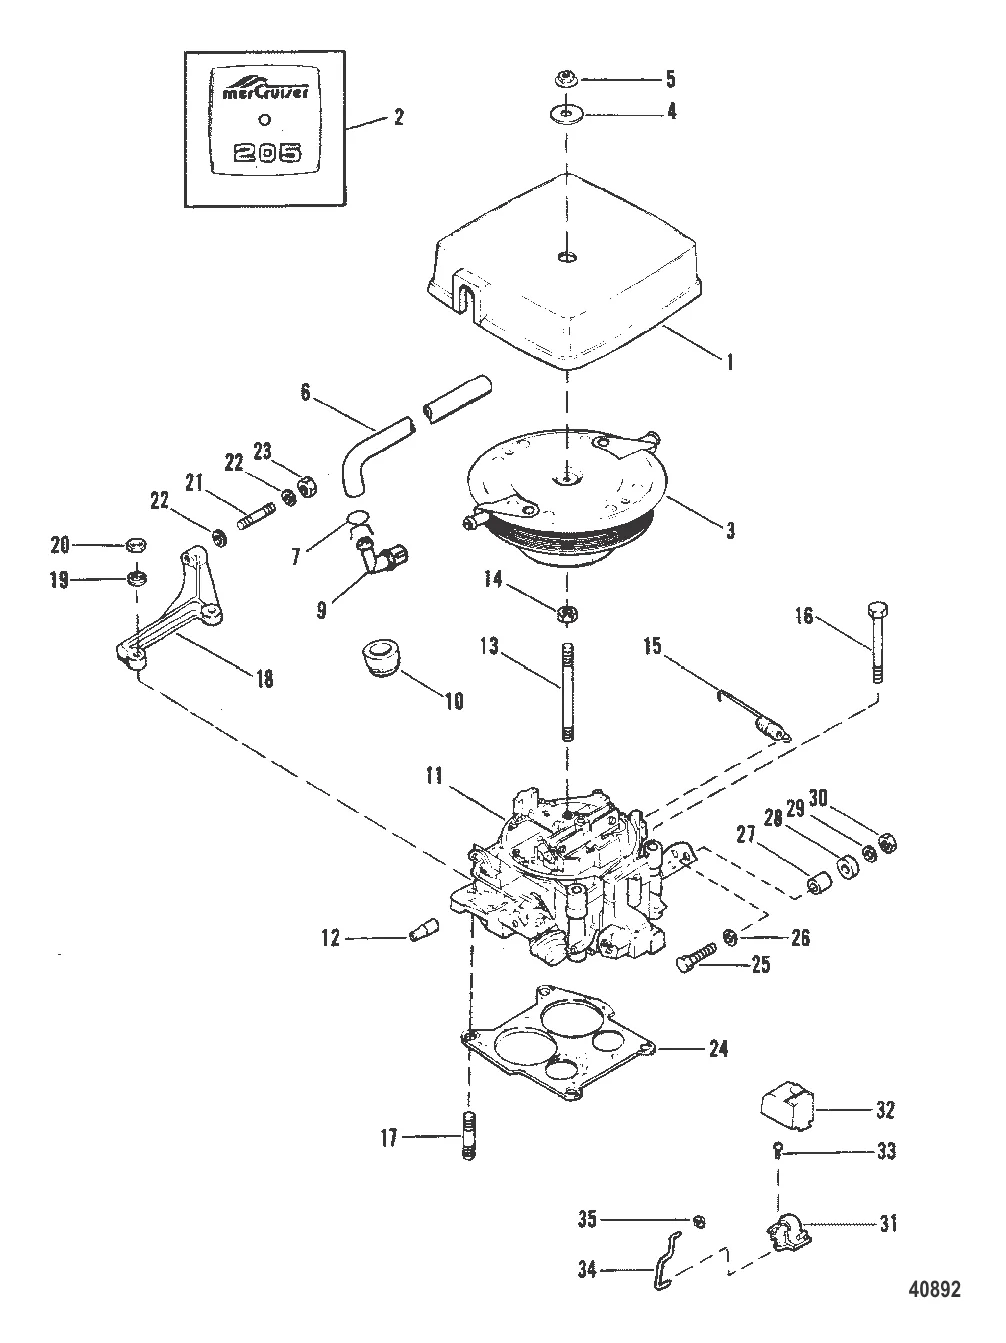 Carburetor & Throttle Linkage (205)